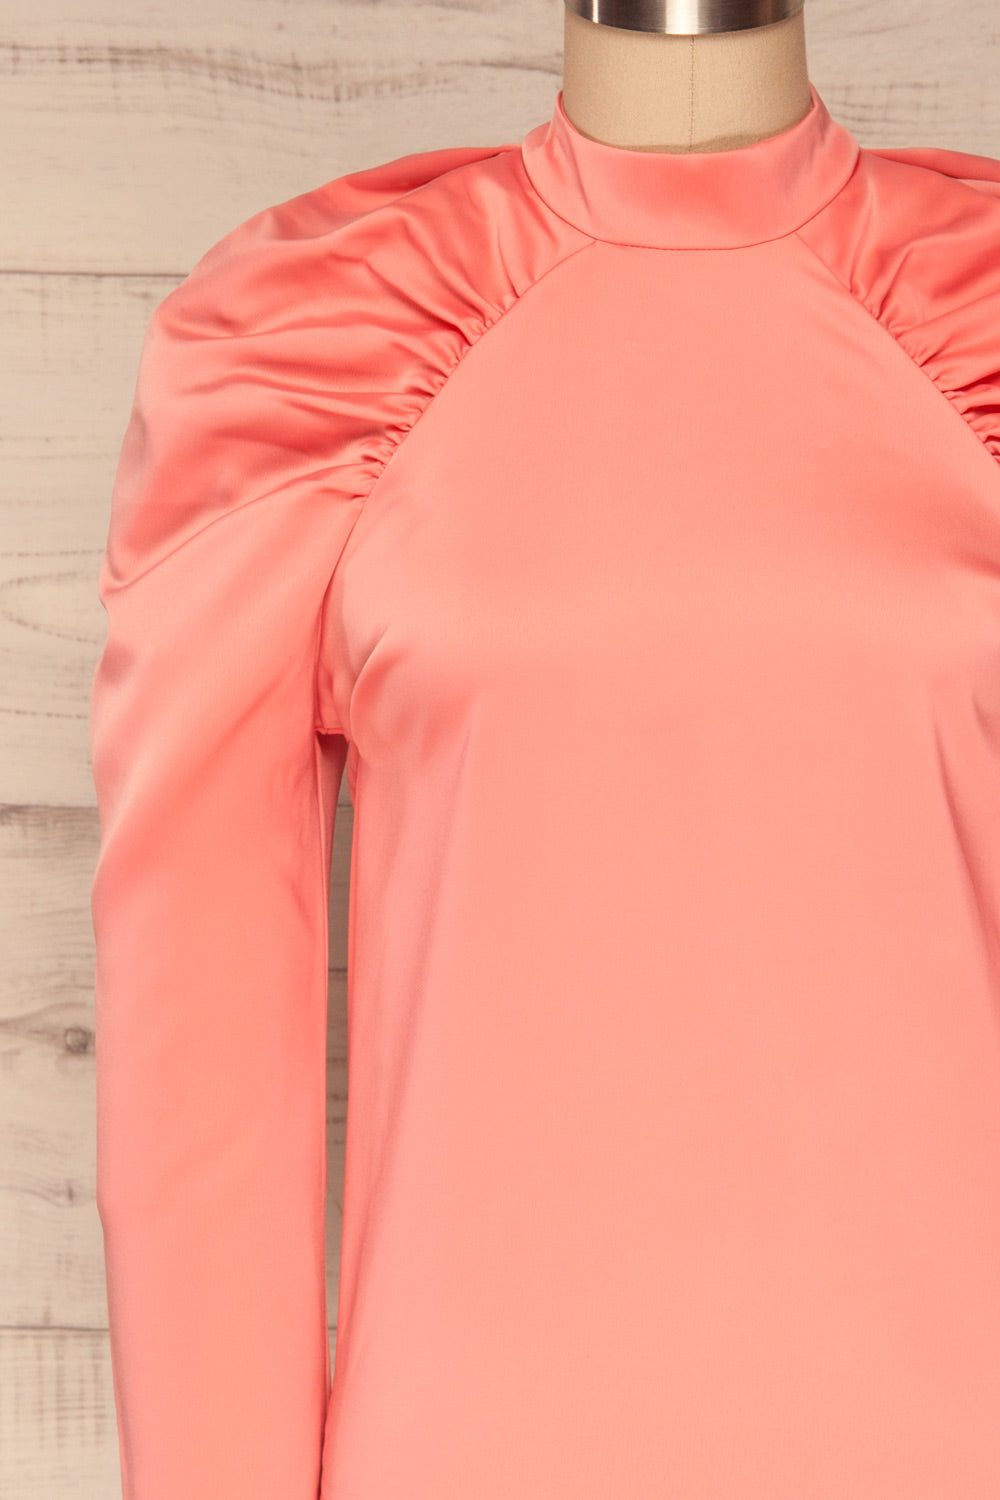 Bridgen Rose Pink Long Sleeved Silky Top | FRONT CLOSE UP | La Petite Garçonne